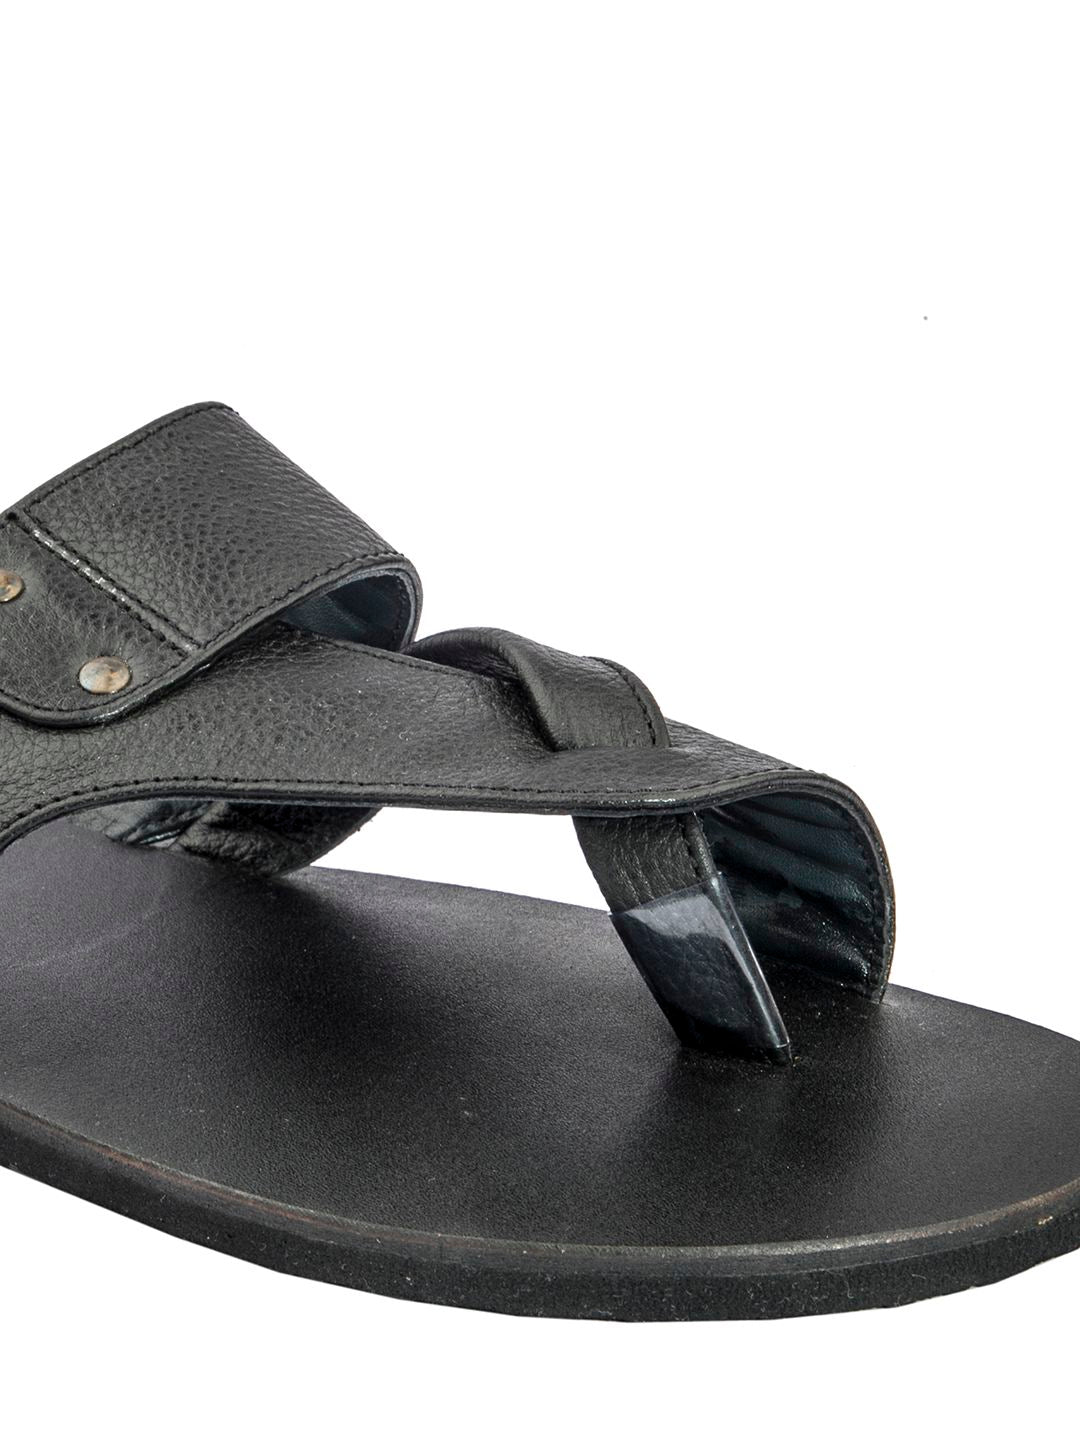 Timeless Sophistication: Handmade Black Leather Sandals for Men